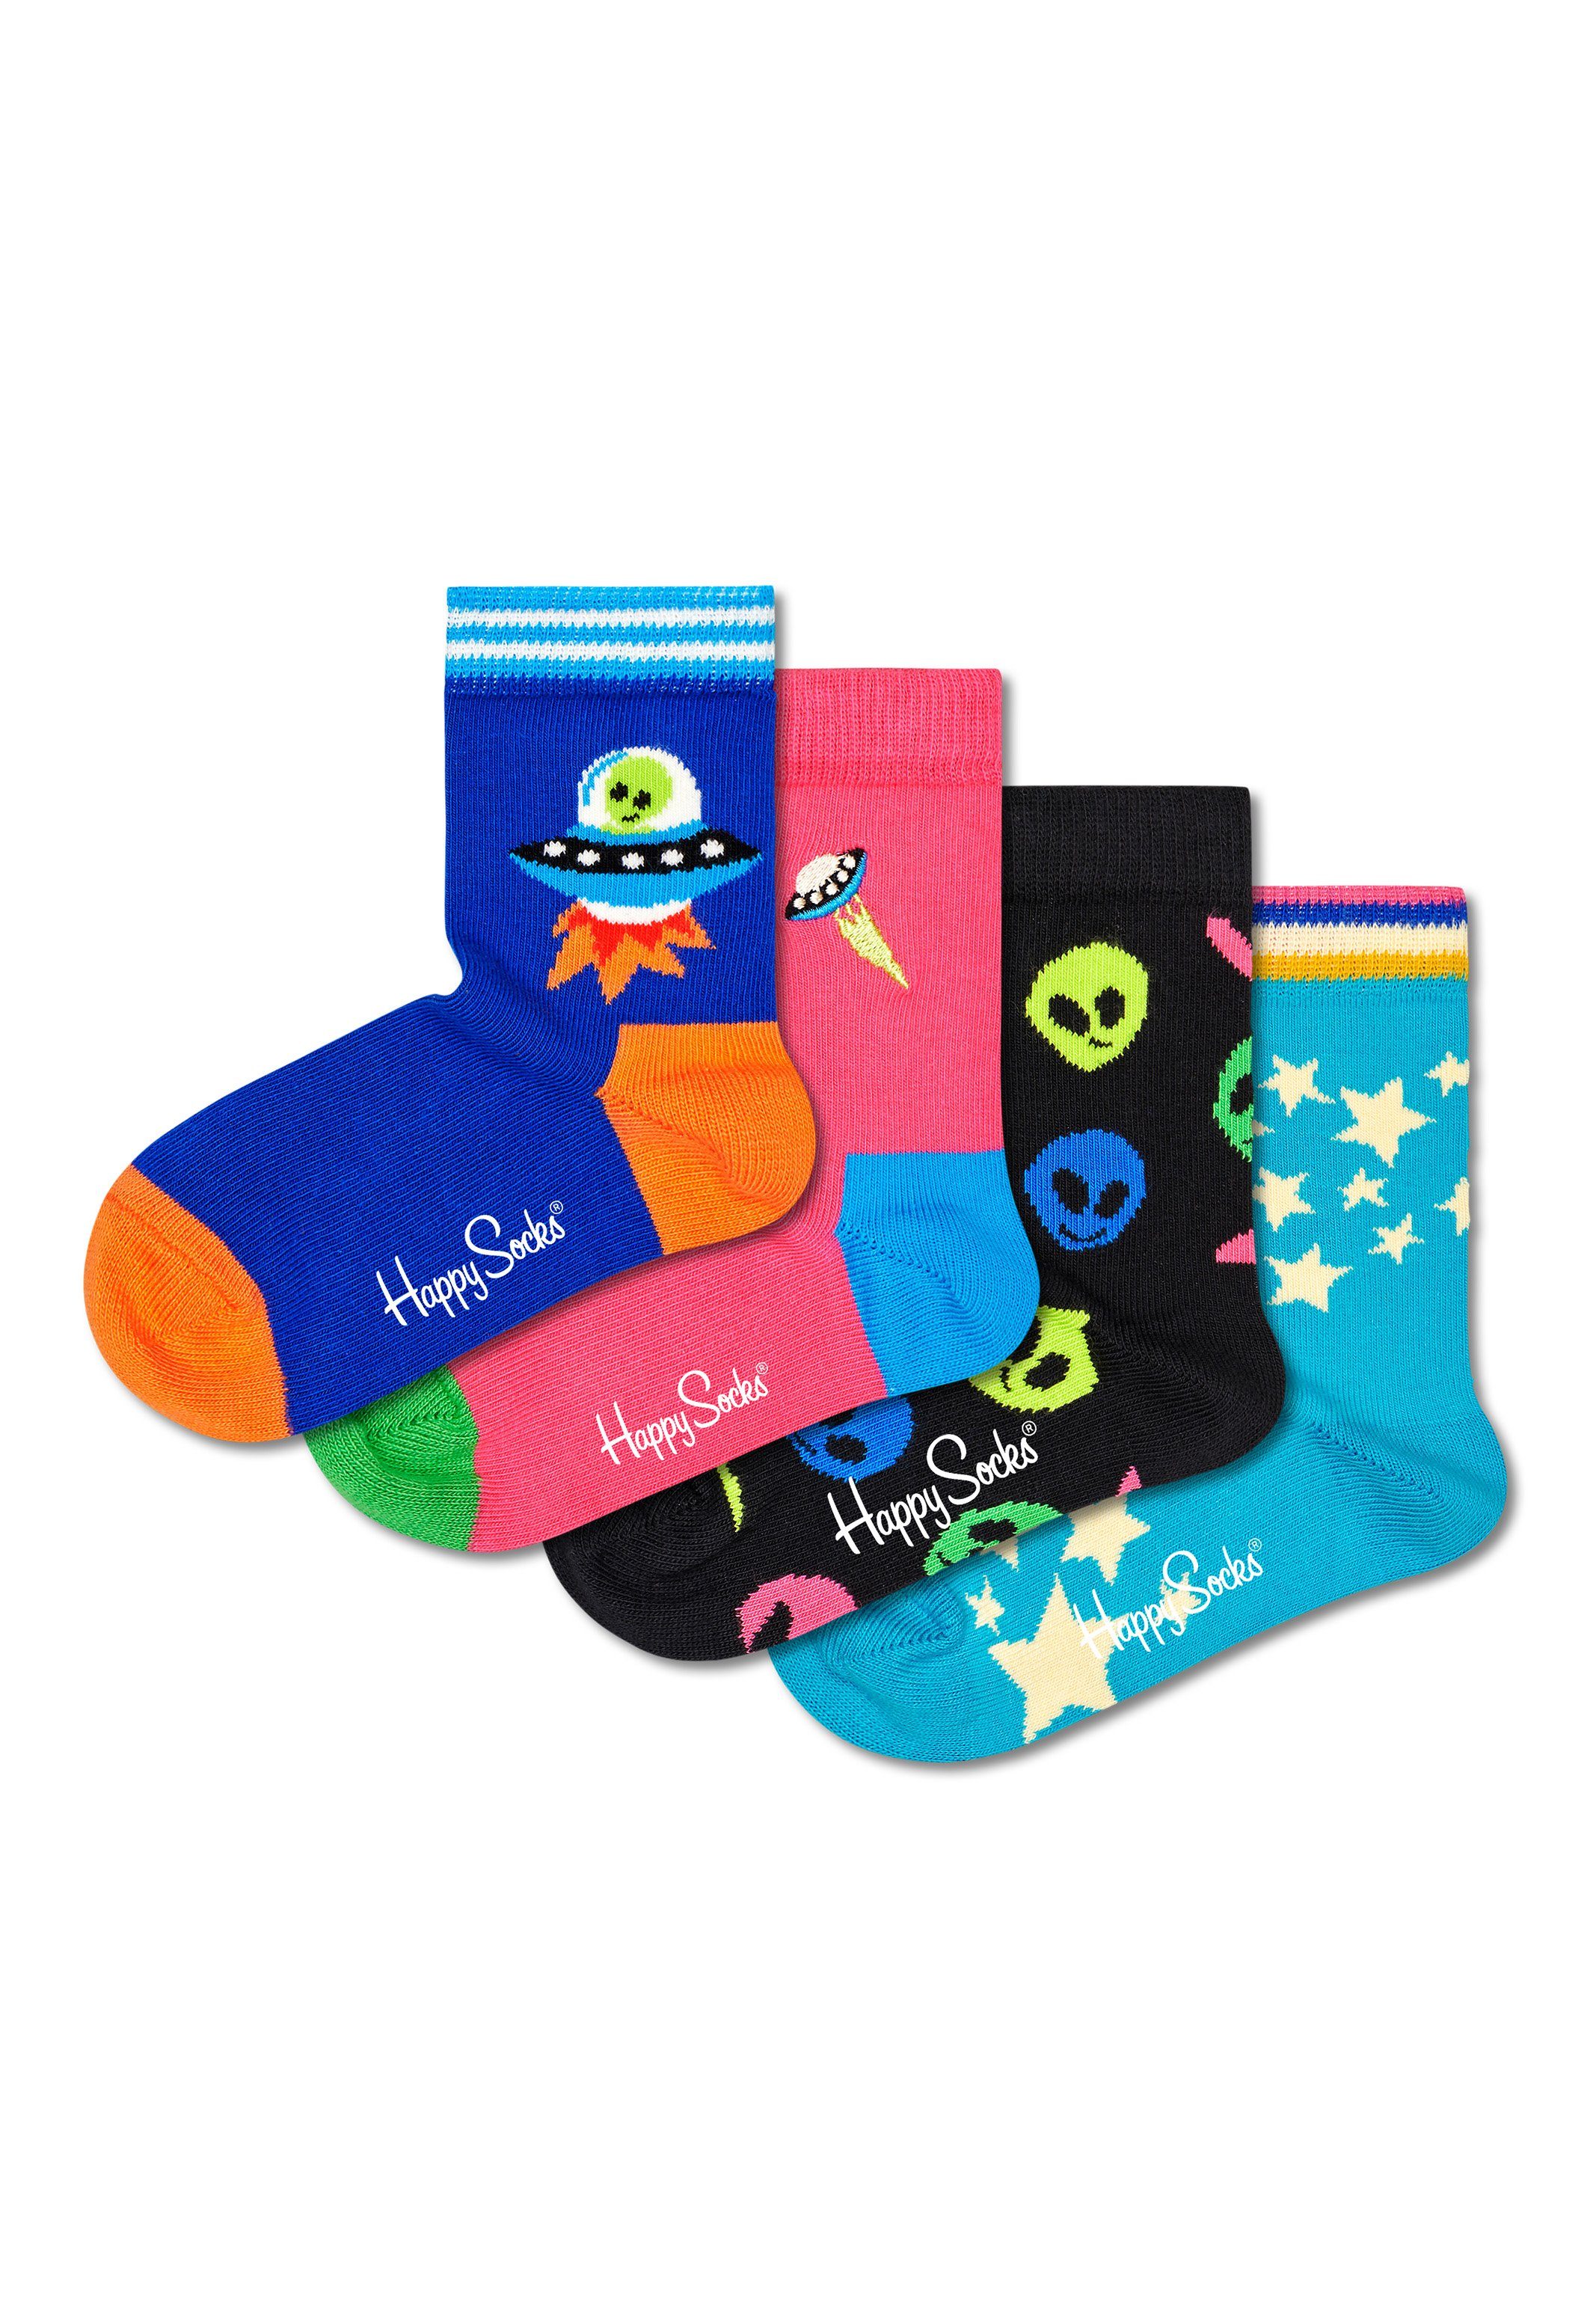 Happy Socks Langsocken Kids Space Geschenk Box (Spar-Set, 4-Paar) 4 Paar Socken - Baumwolle - 4 Paar bunte Socken in einer Geschenkbox